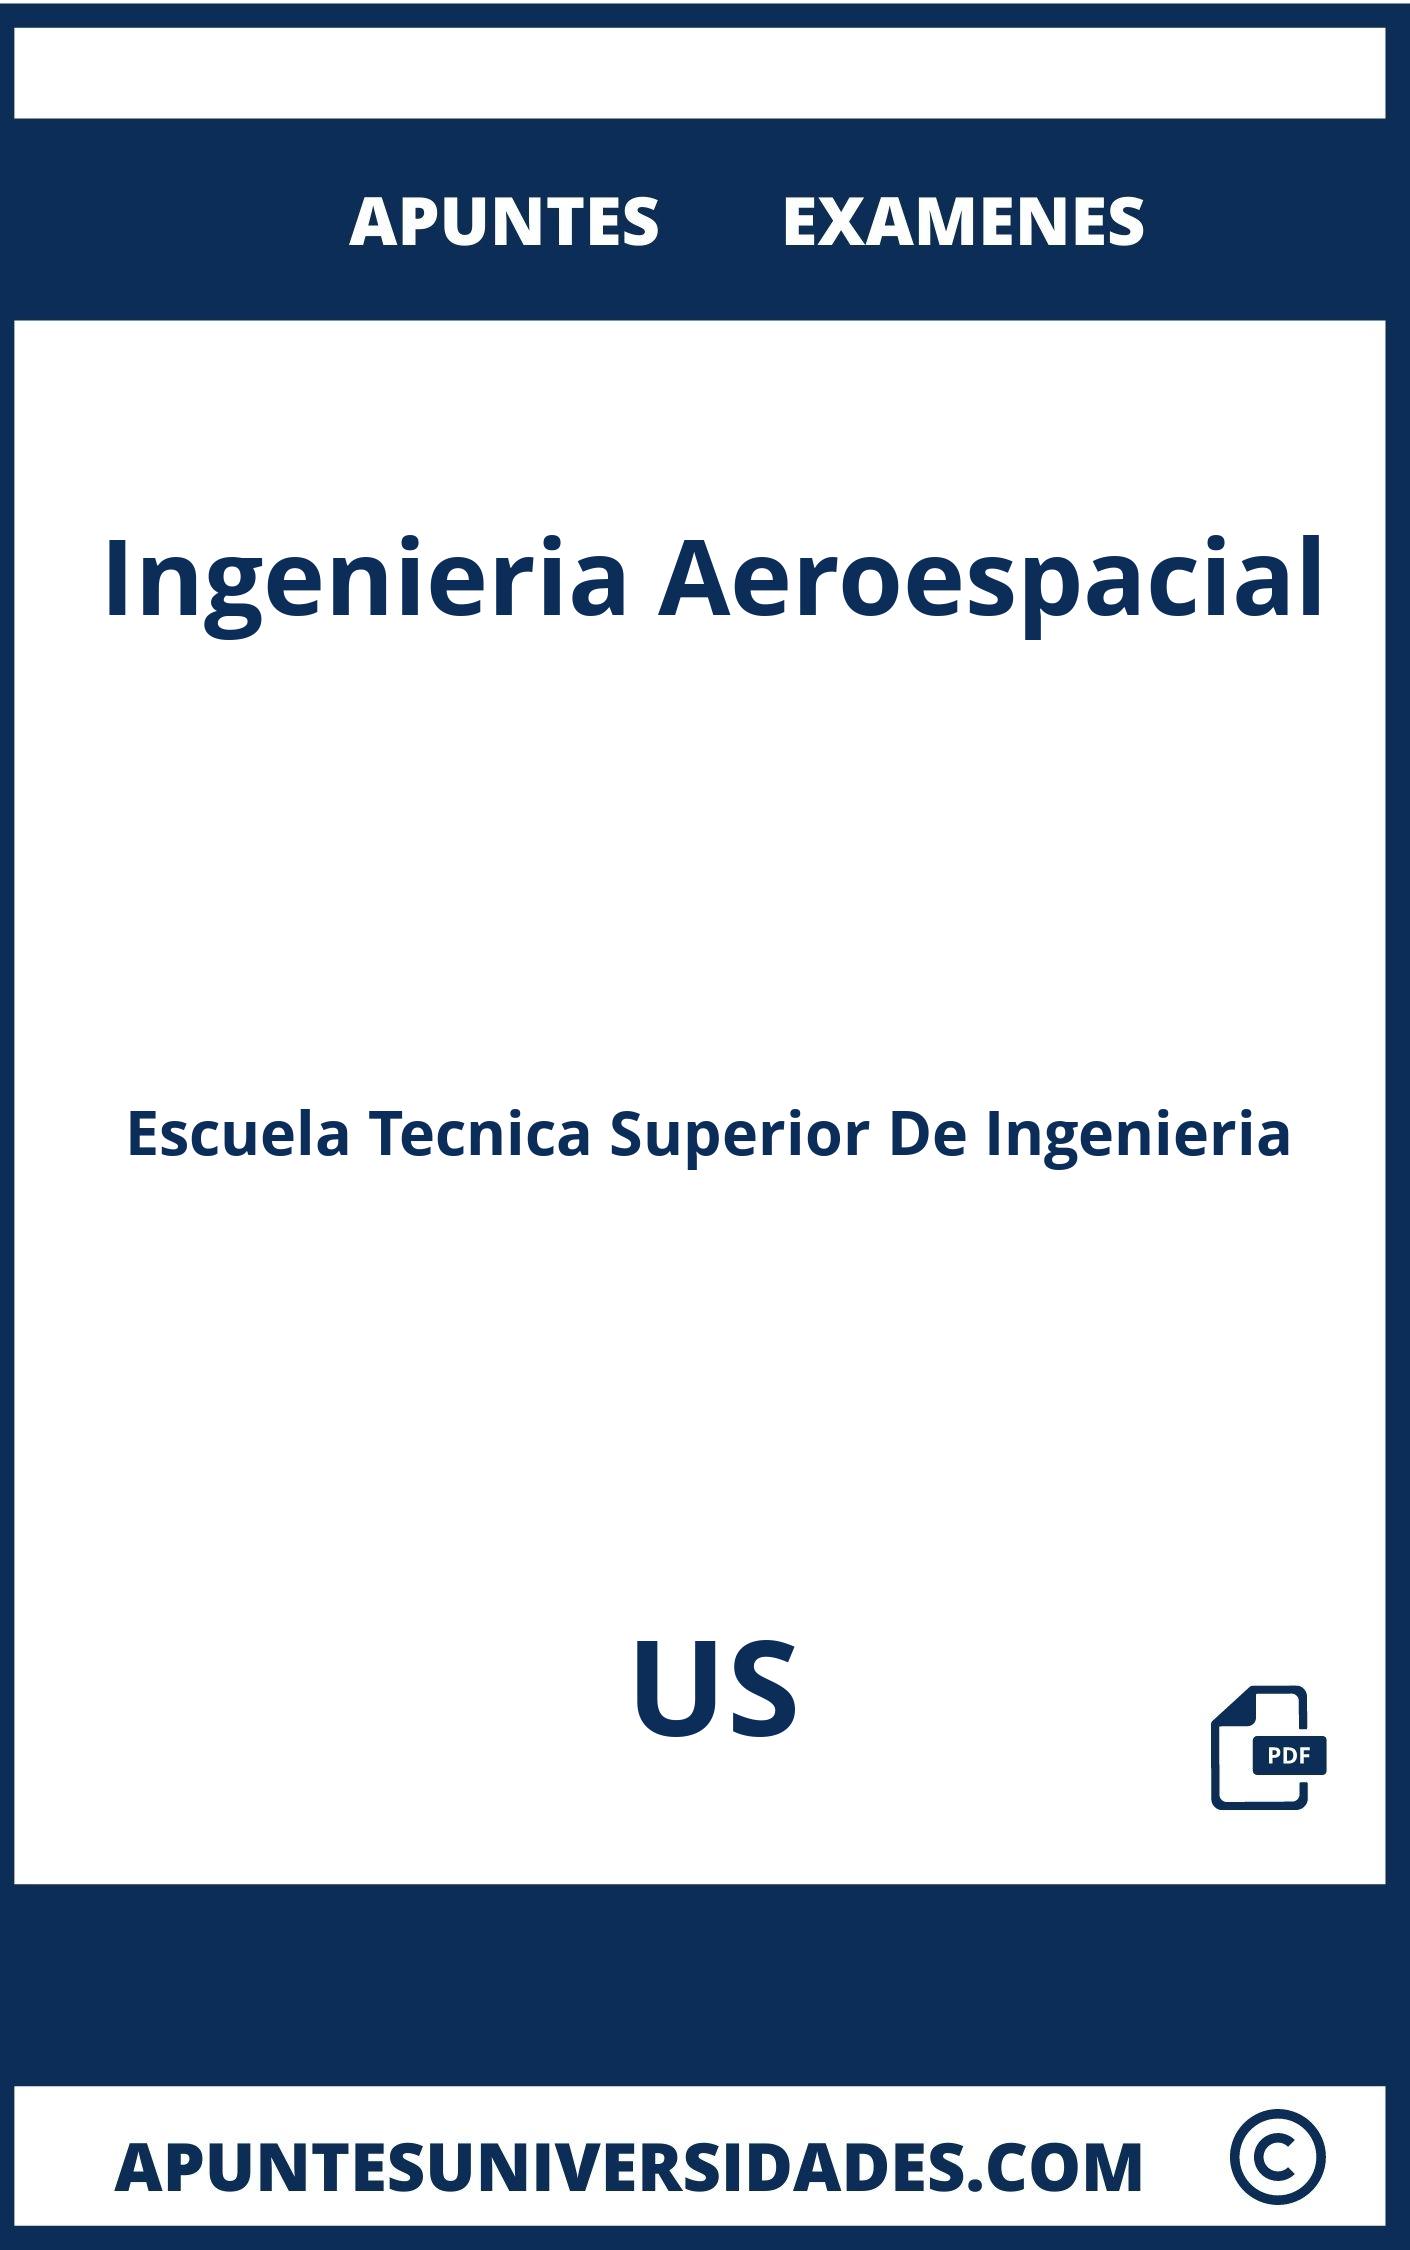 Ingenieria Aeroespacial US Examenes Apuntes